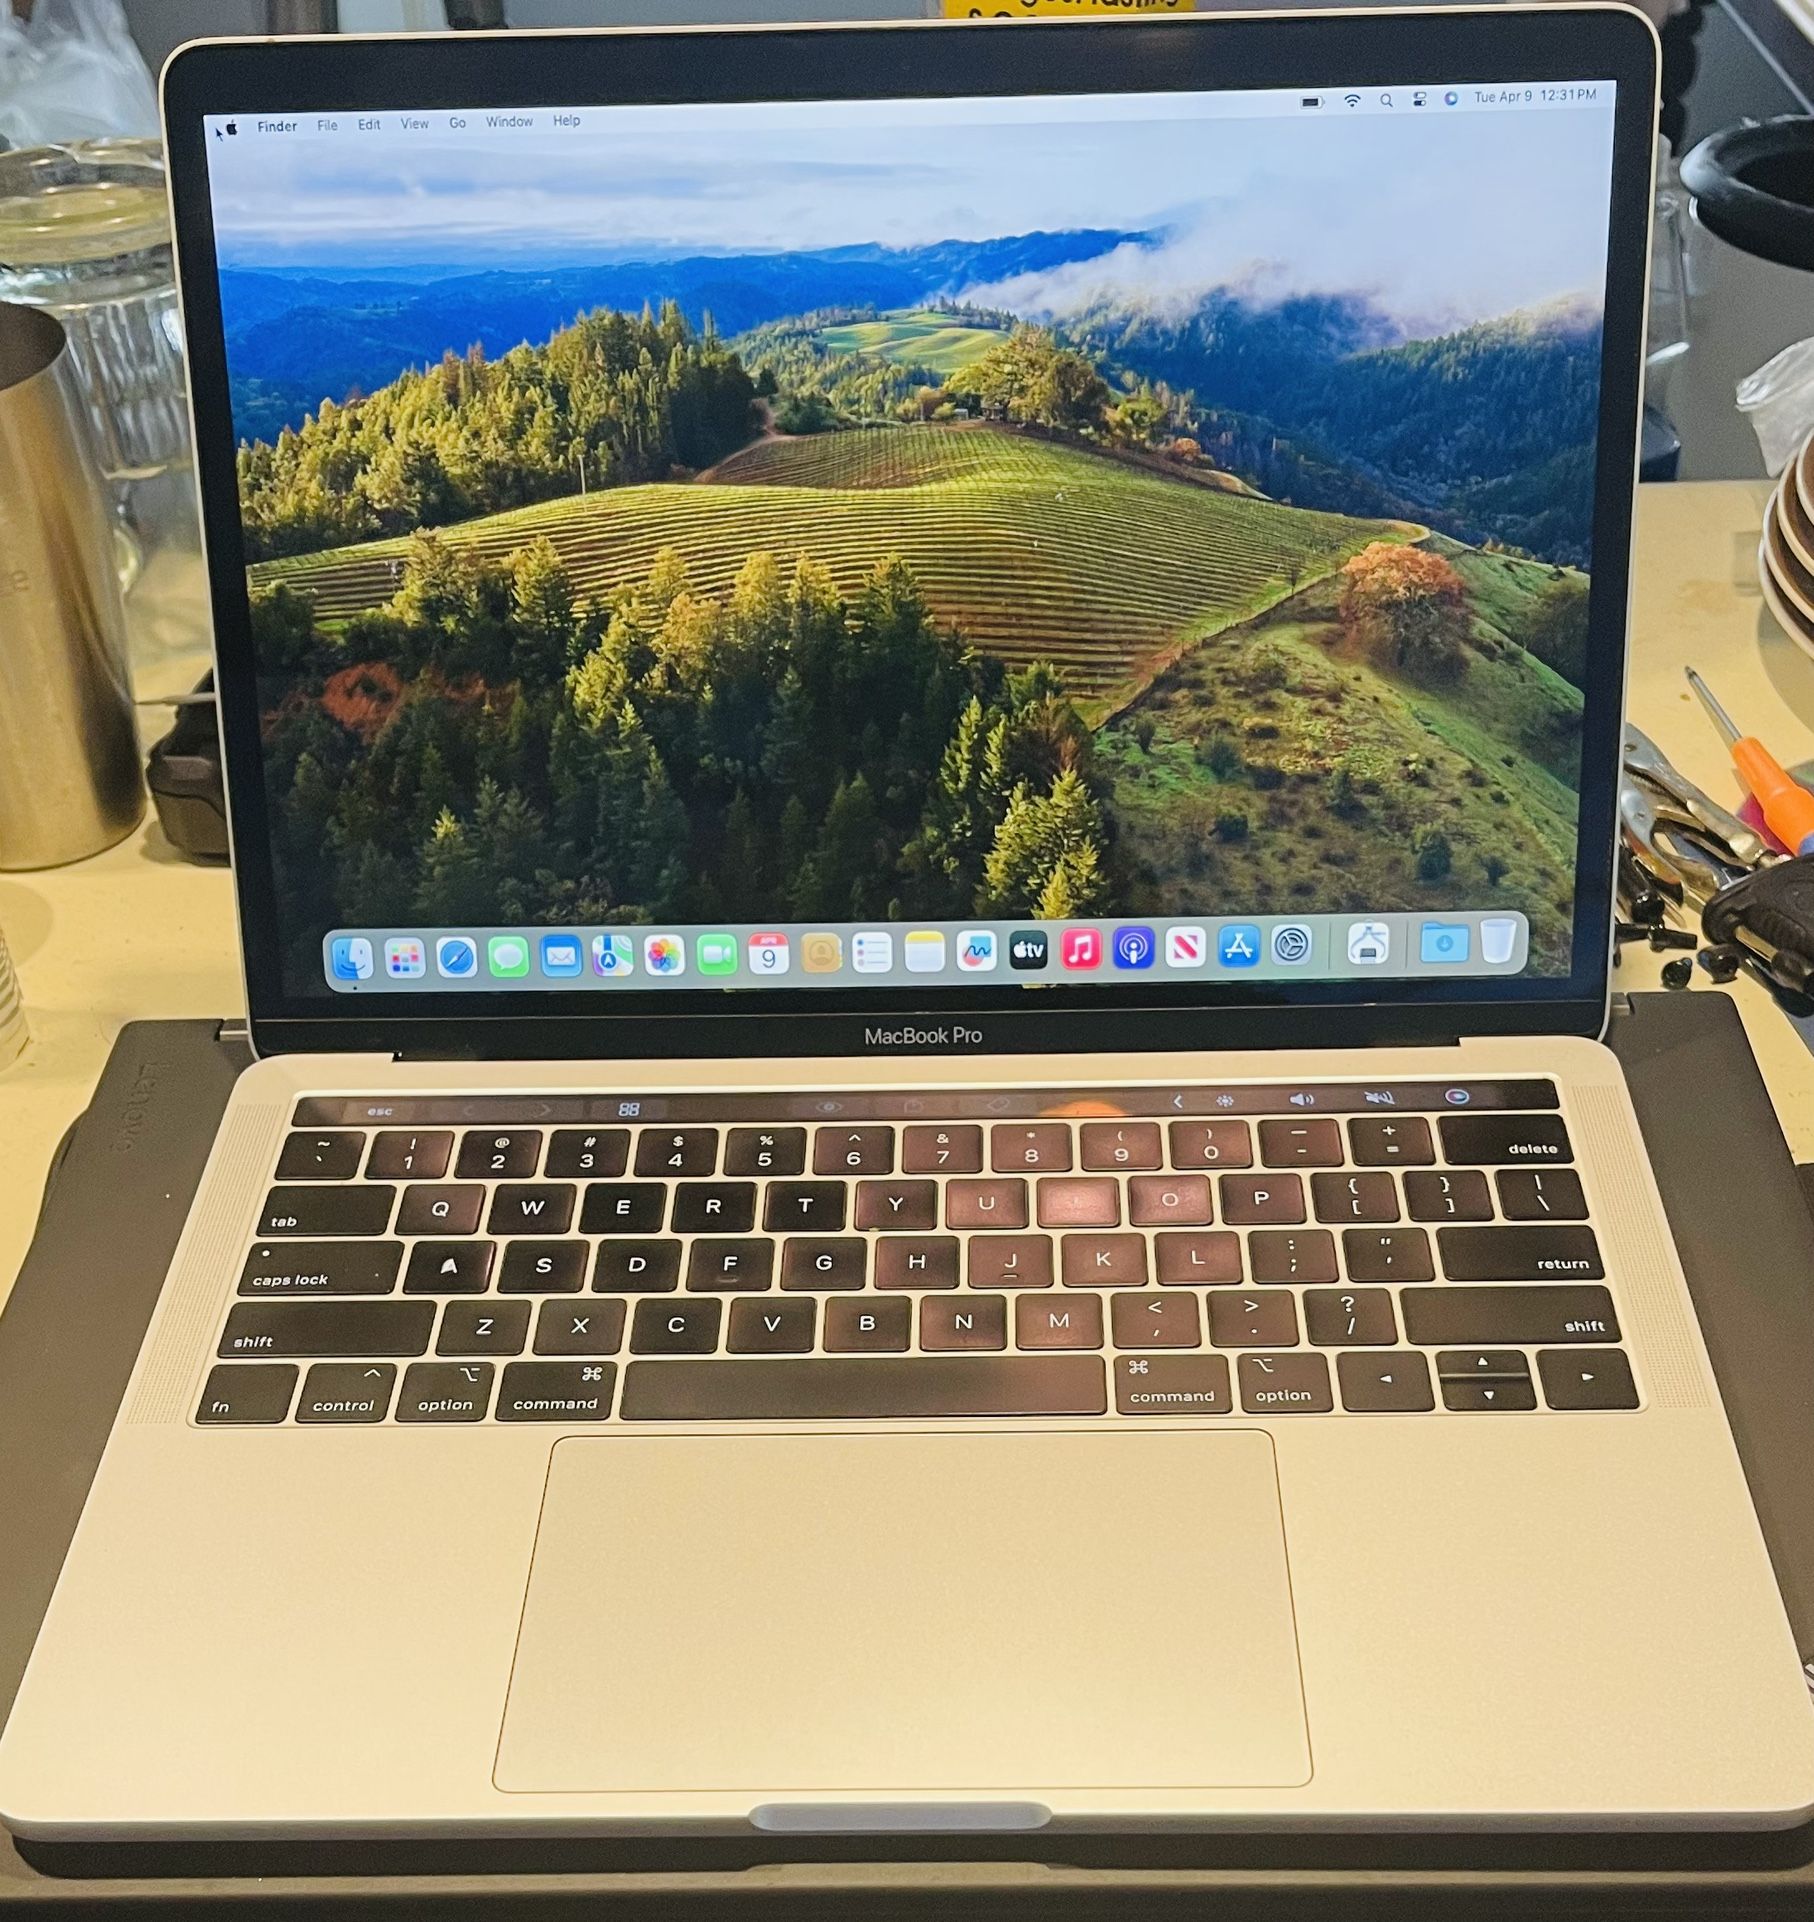 2019 macbook pro 13 touch bar 8gb ram Quad core i5 